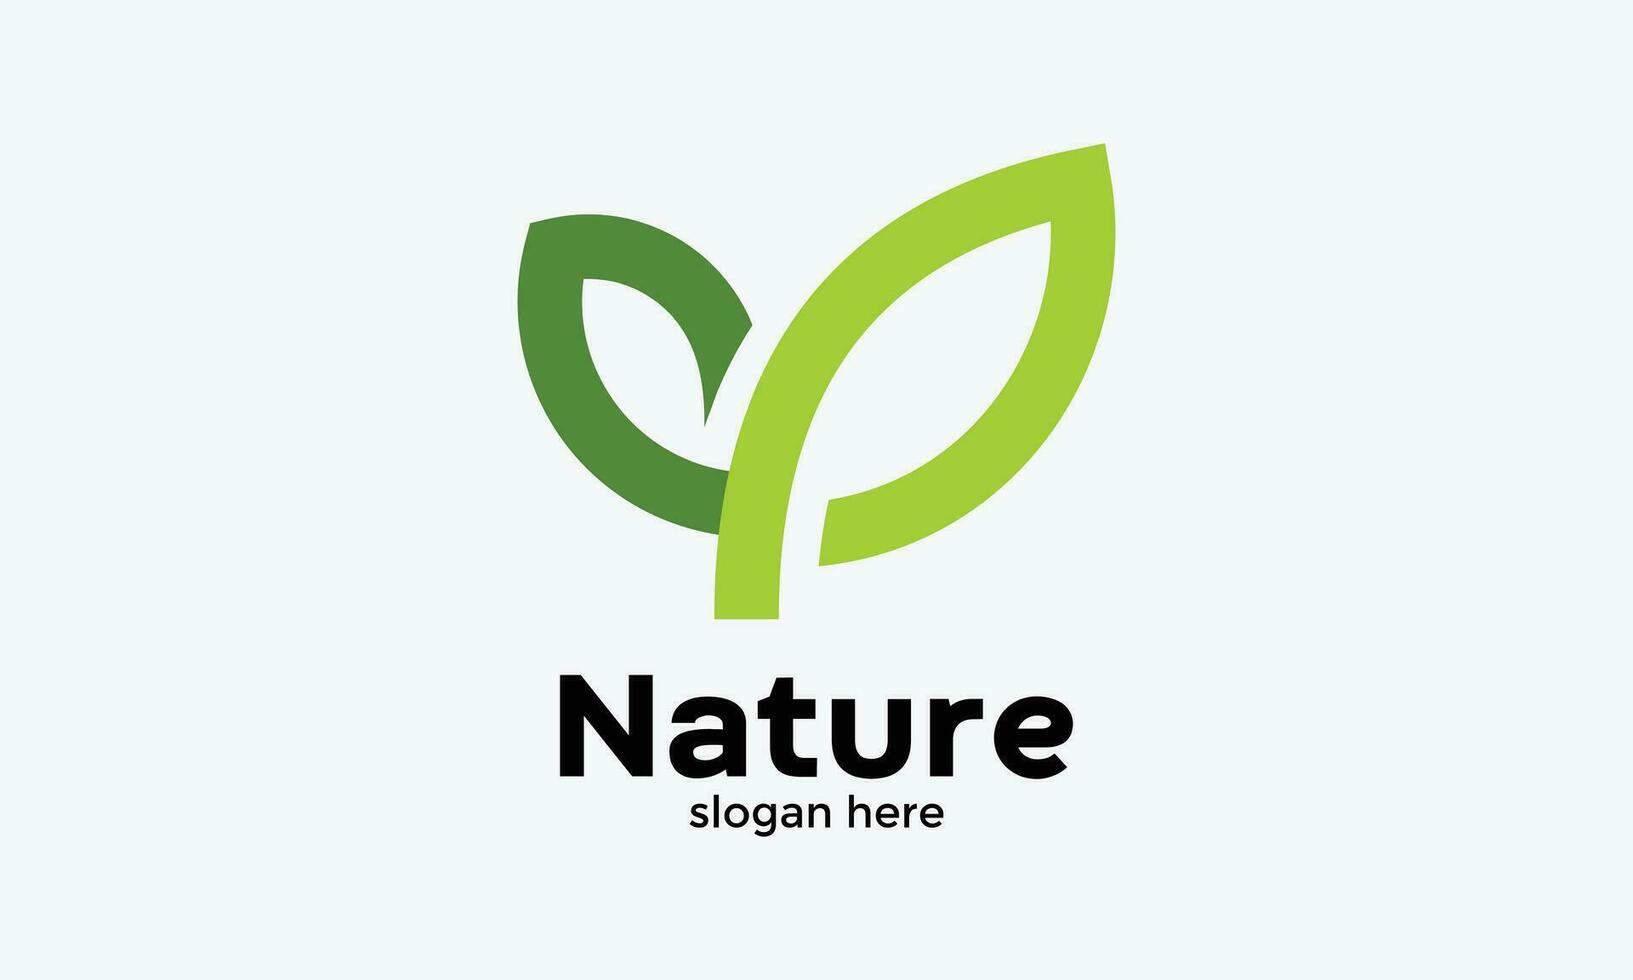 Nature leave logo minimalist design green eco concept bio ecology health life environmental conservation plant growth symbol vector